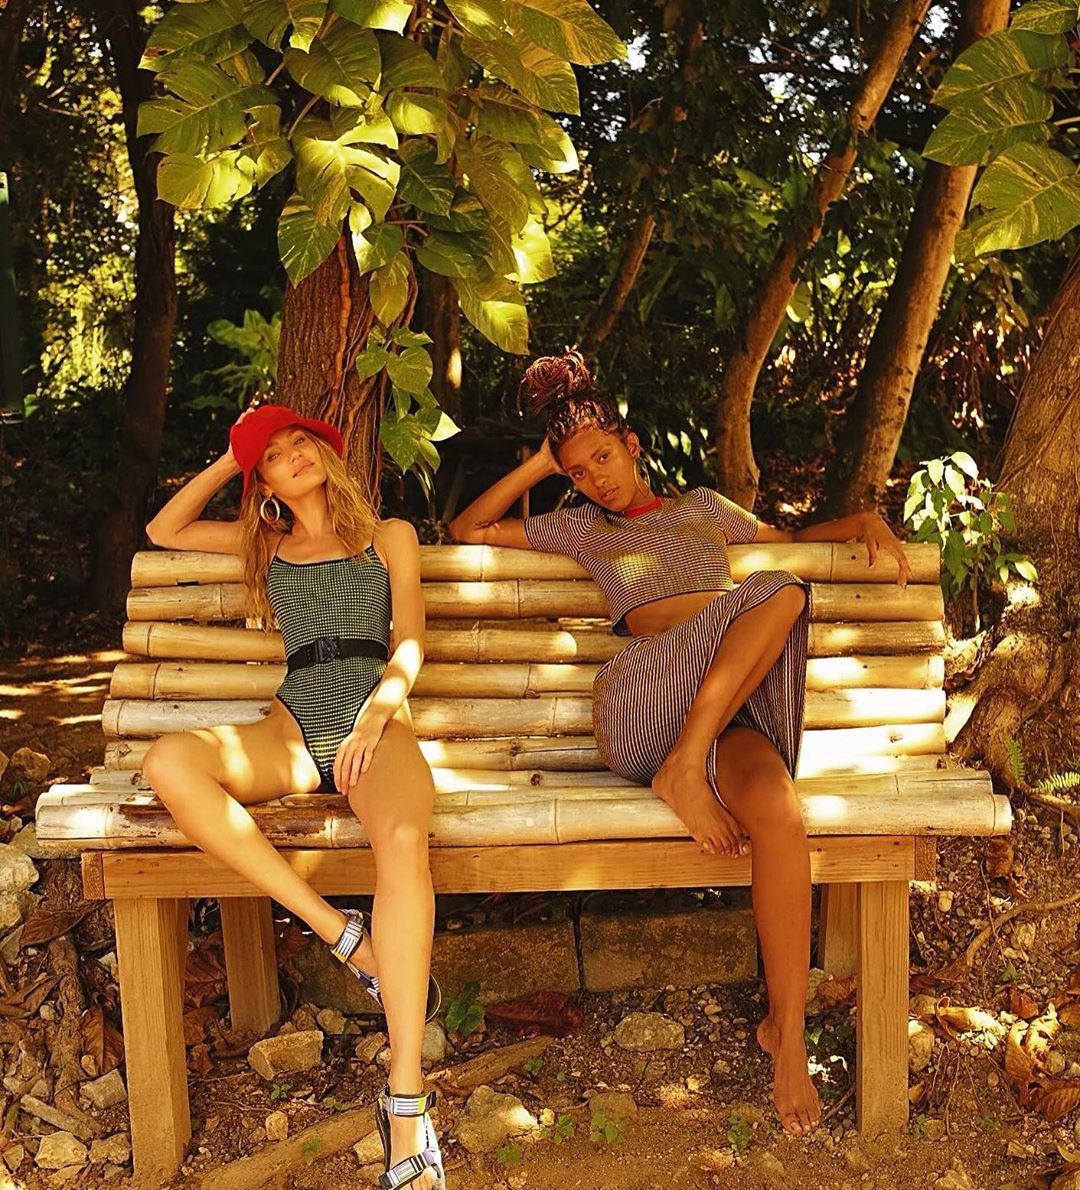 Hotest Recent Candice Swanepoel Photos Instagram: Candice Swanepoel,  Hot Instagram Models,  instagram models,  Instagram pictures,  top Instagram models,  hottest girls on Instagram  